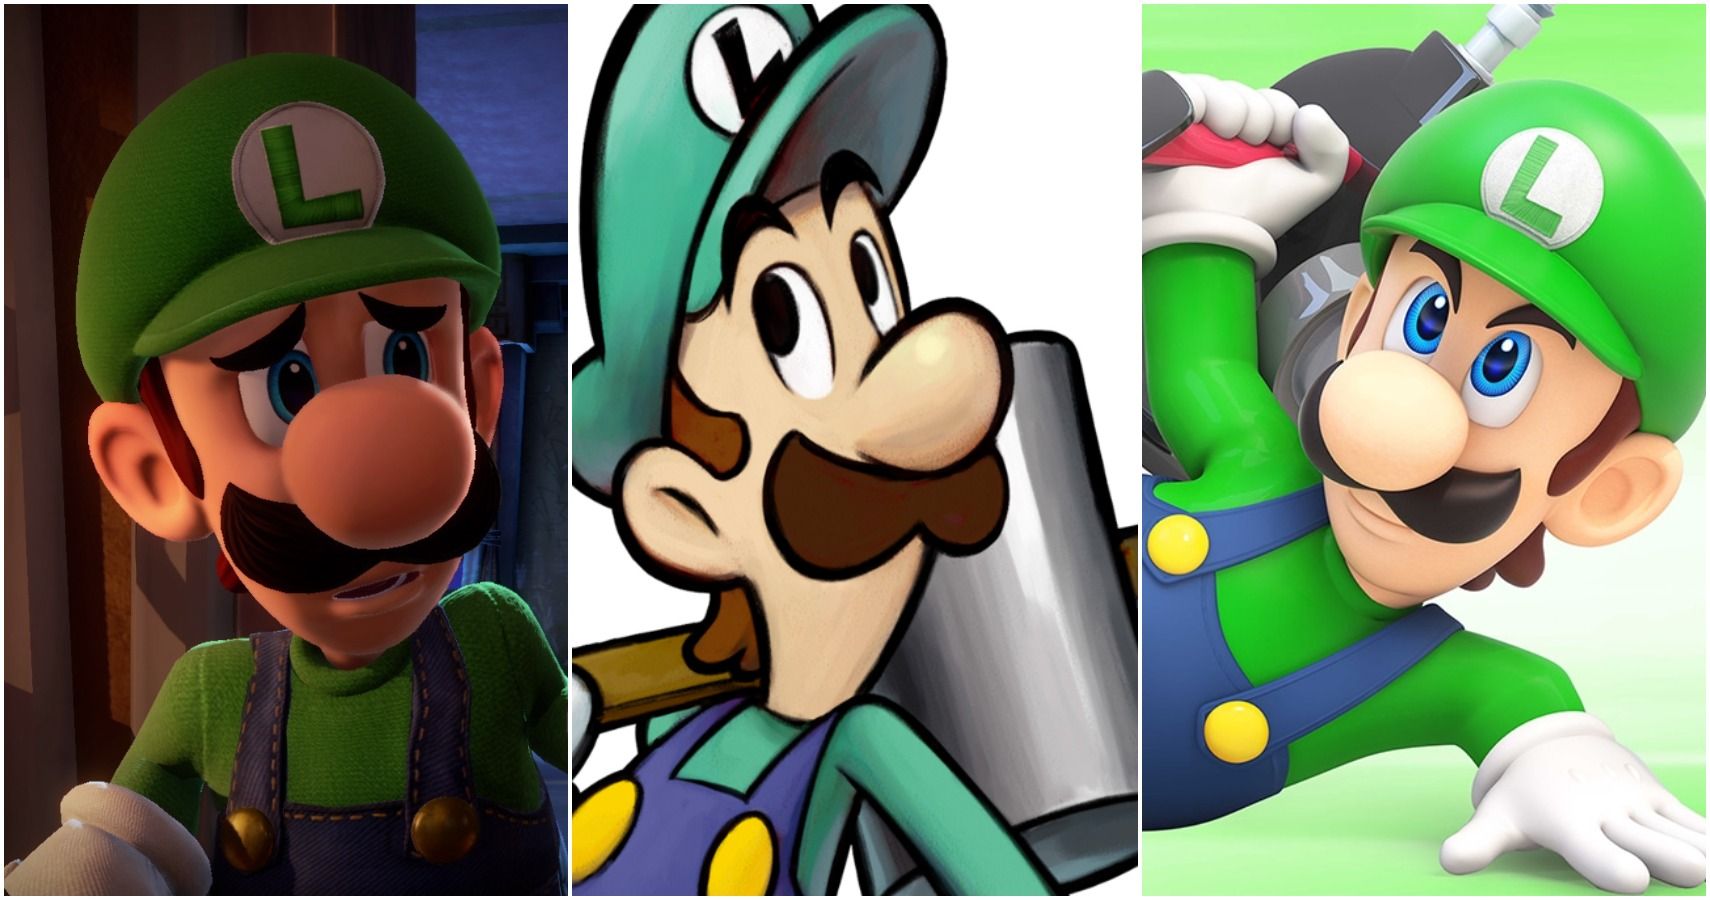 Detail Images Of Luigi And Mario Nomer 46